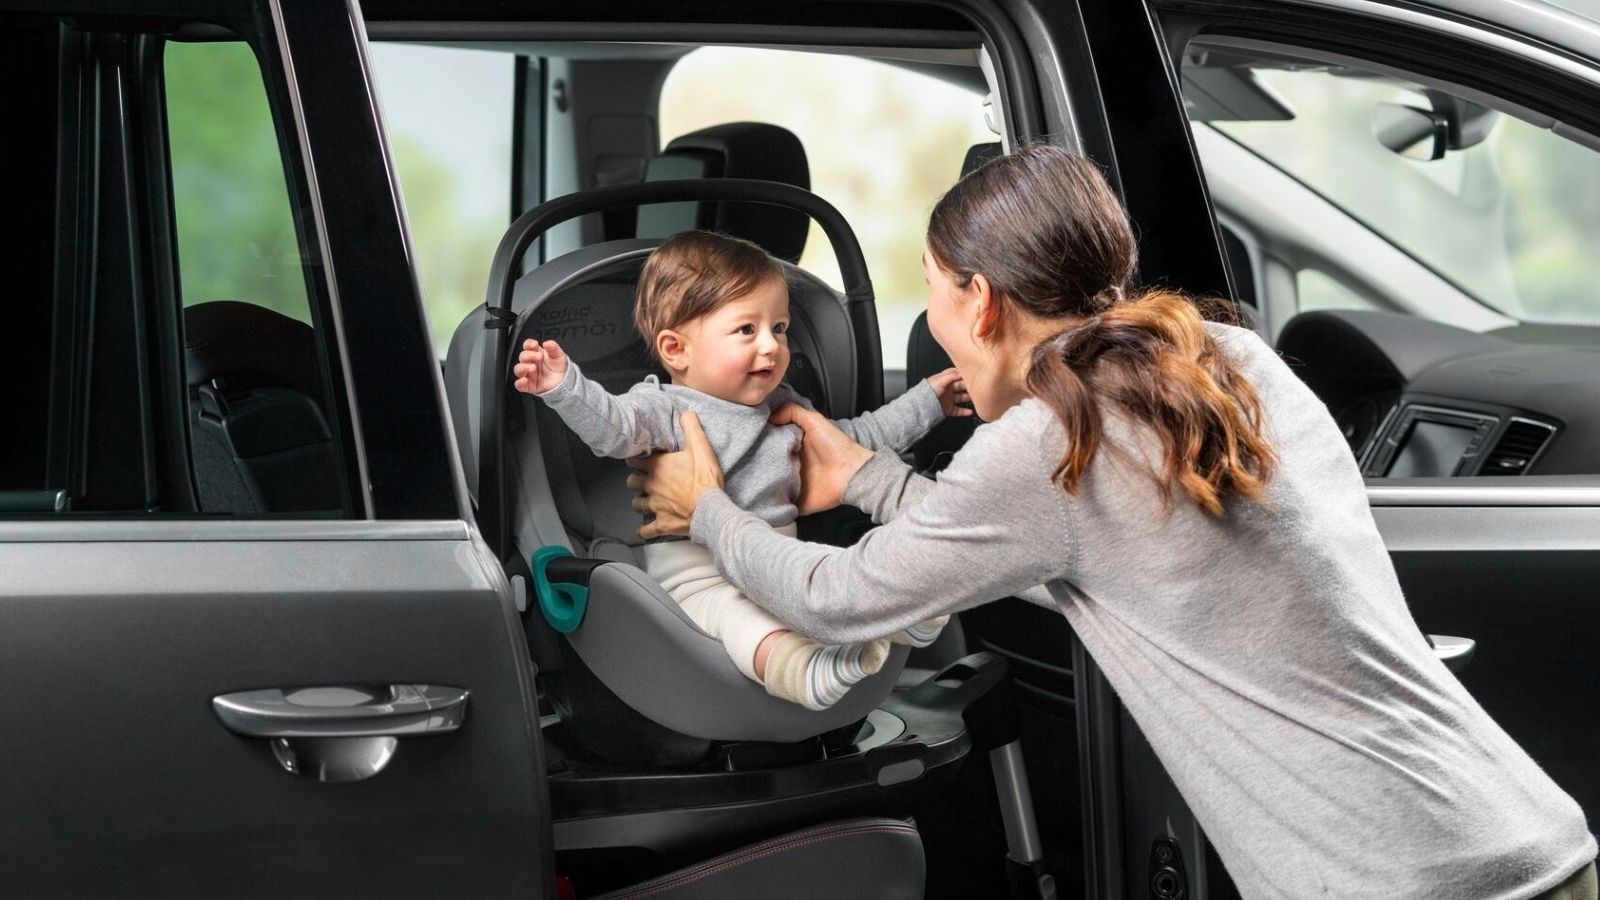 Britax KIDFIX III M review - Car seats from 4 years - Car Seats